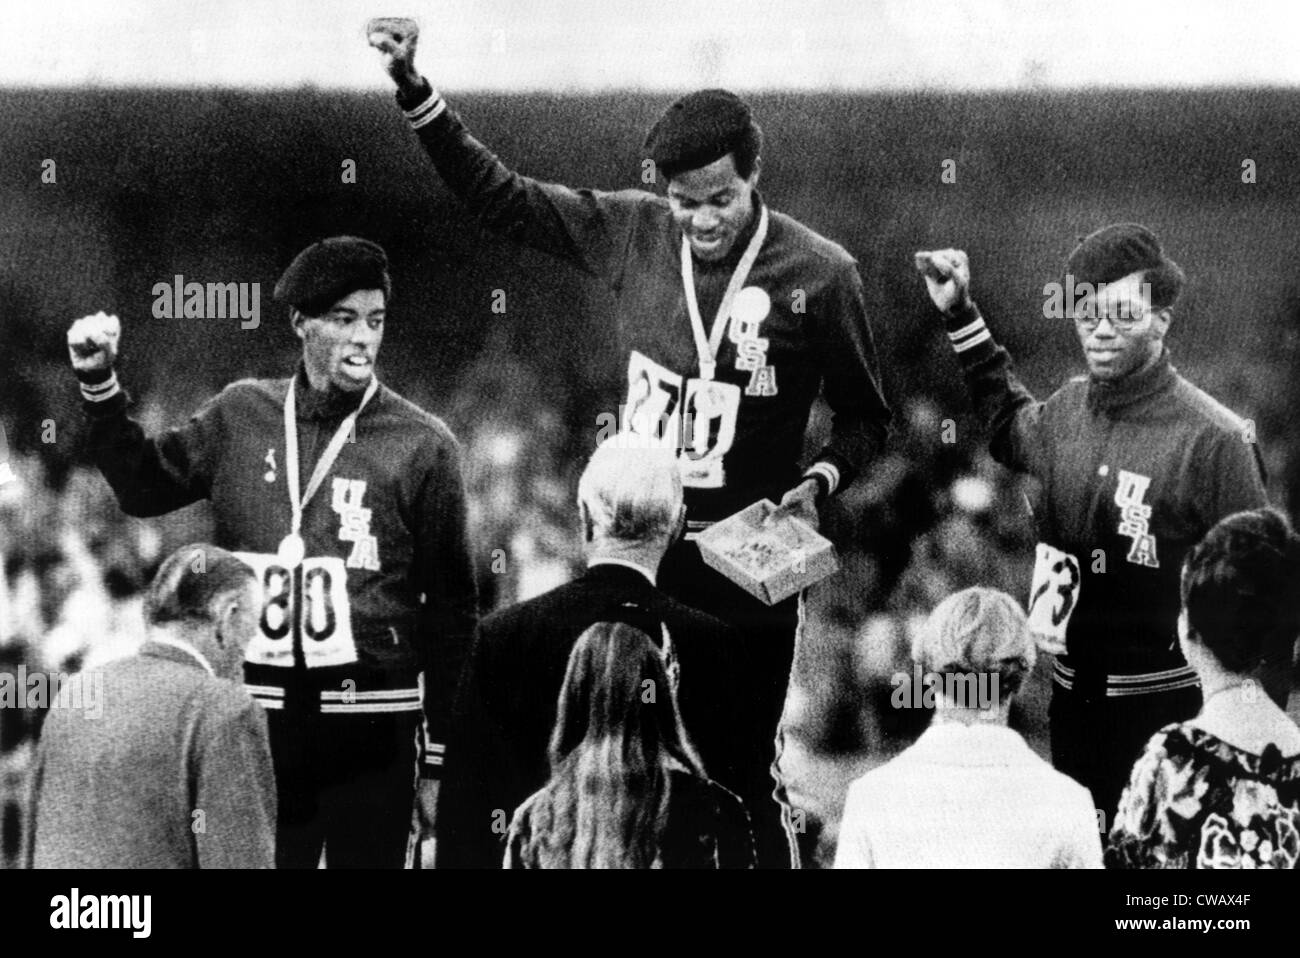 1968 Olimpiadi, 400 metro eseguire vincitori Larry James, Lee Evans, Ron Freeman dare 'Black Power' omaggio alla ricezione di medaglie d'oro, Foto Stock